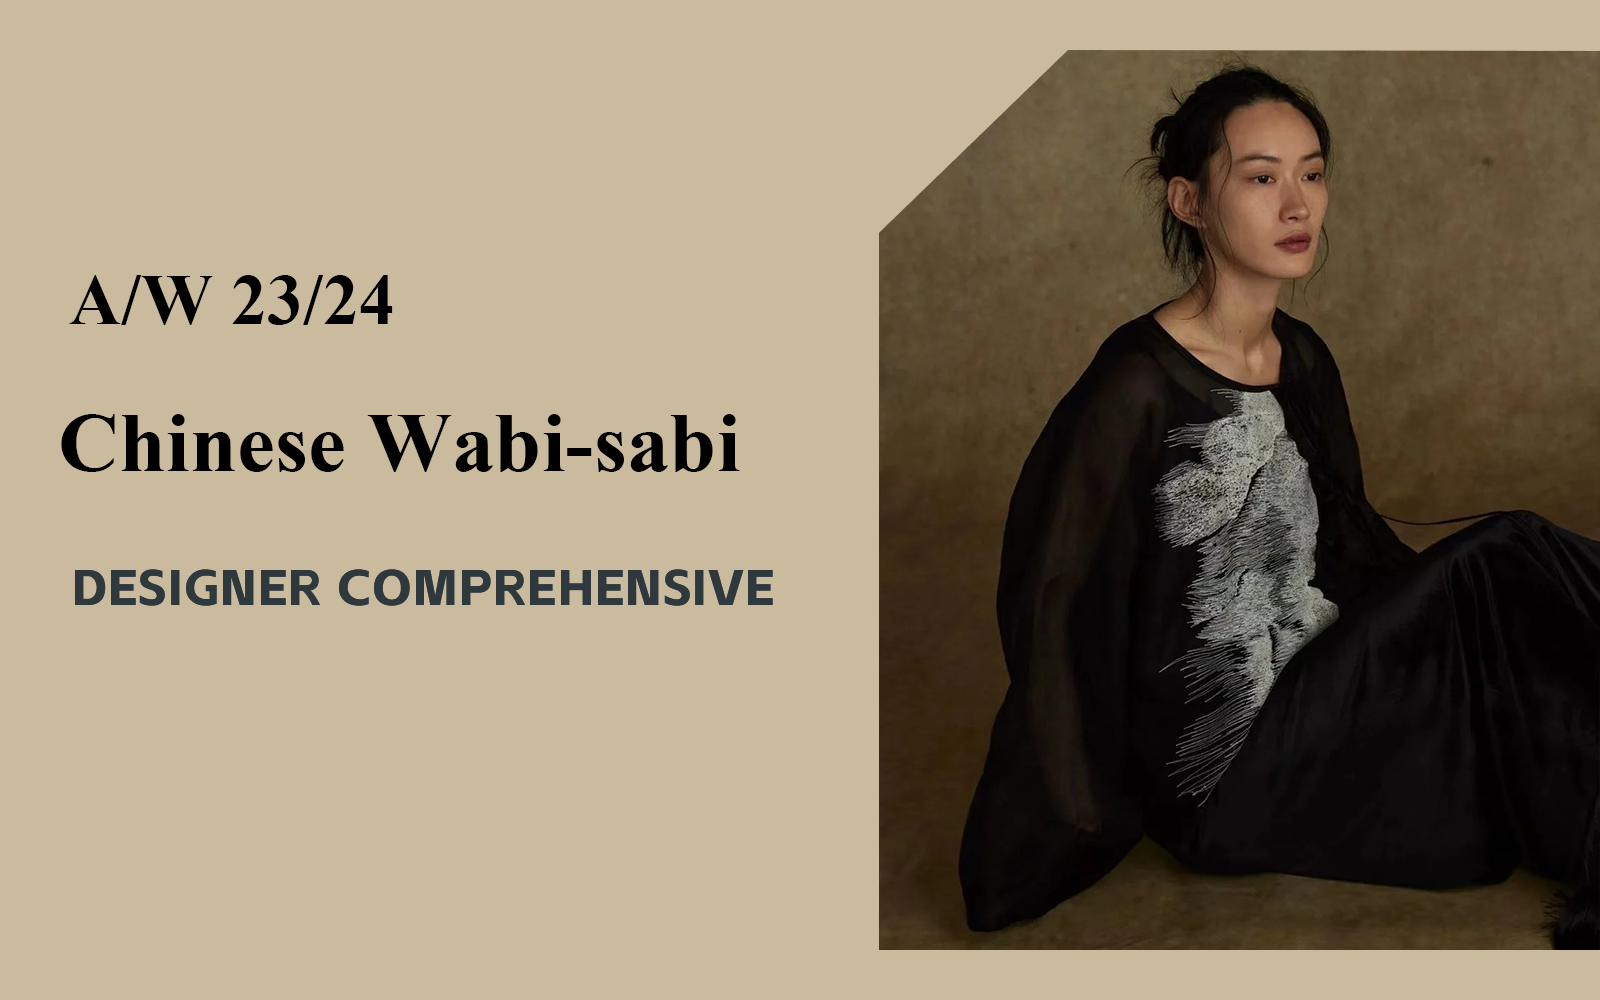 Chinese Wabi-sabi -- The Comprehensive Analysis of Womenswear Designer Brand